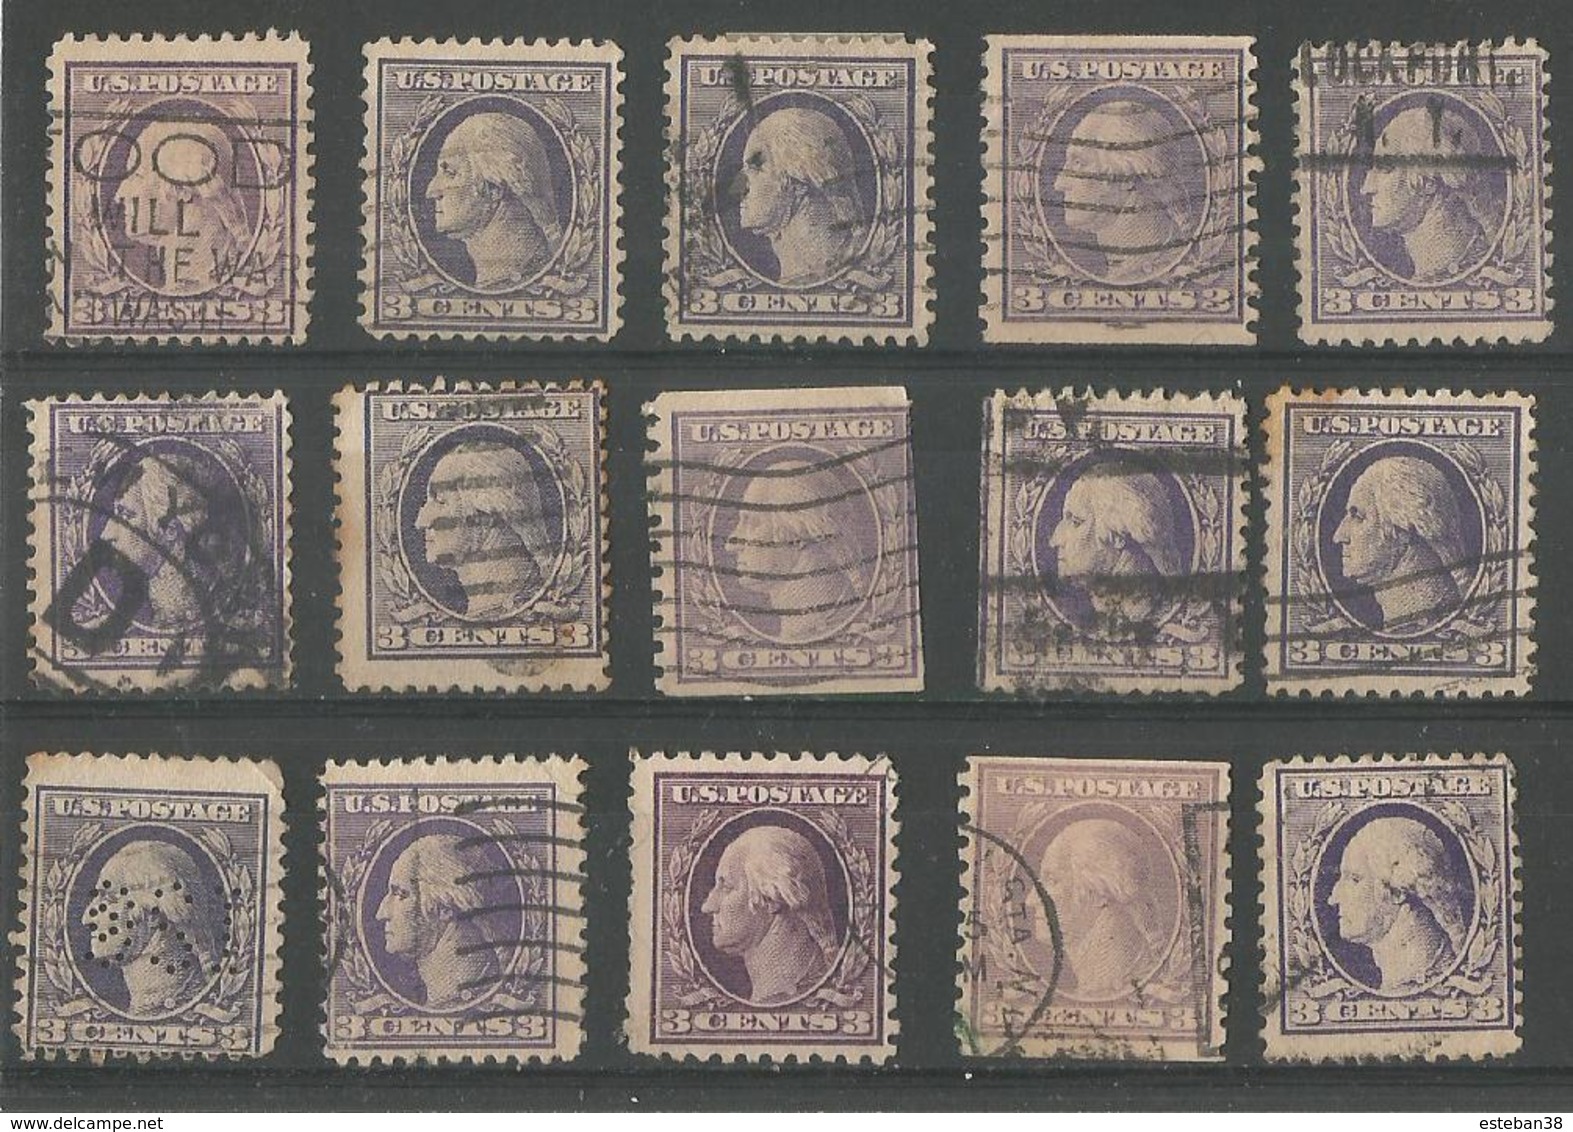 Washington 3c Violet - Used Stamps